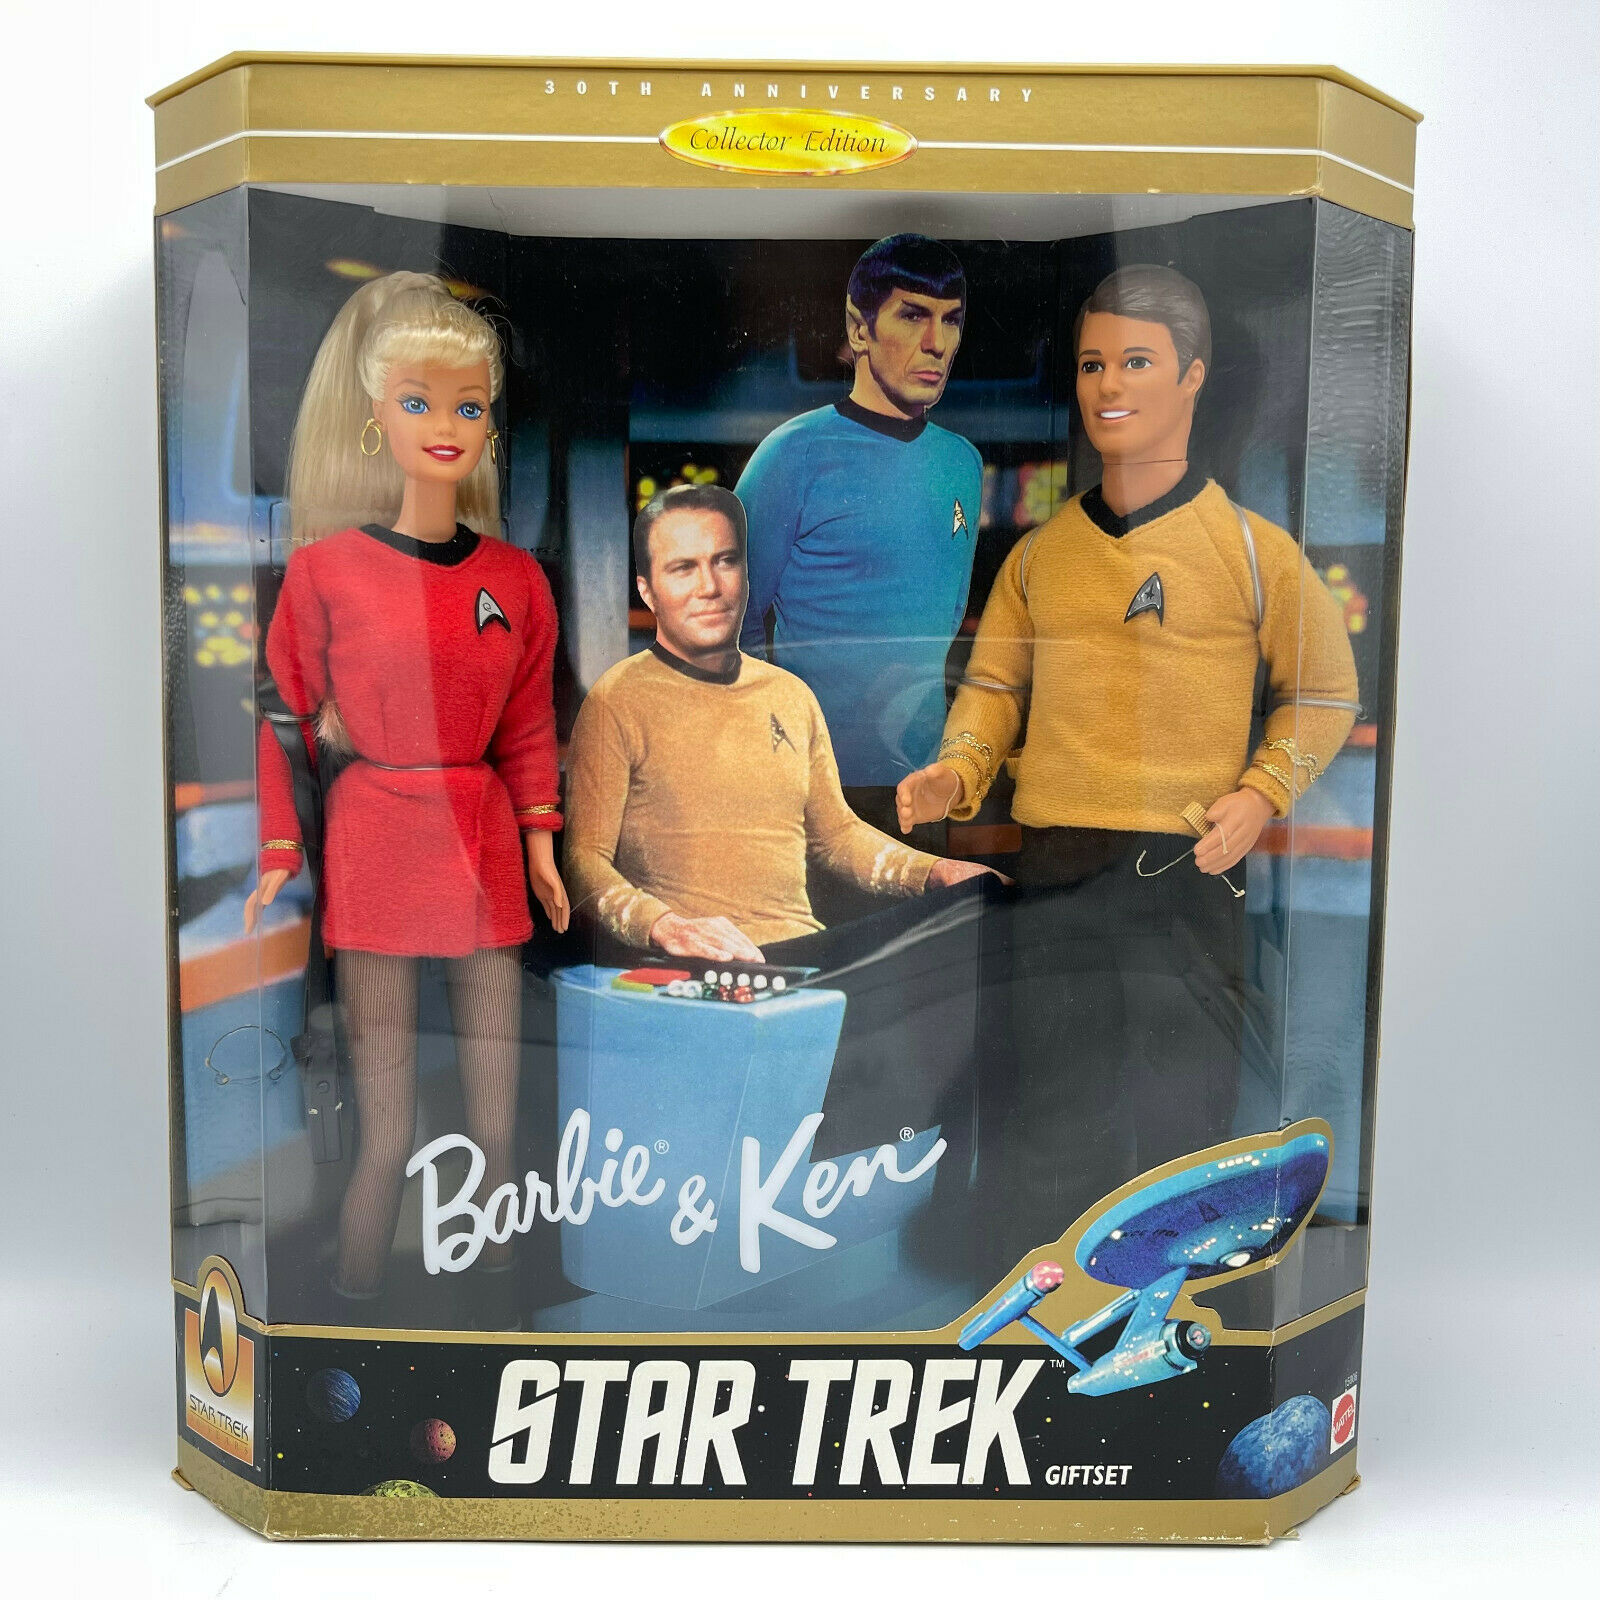 Star Trek Barbie and Ken 30th Anniversary 1996 Collectors Edition 15006 NRFB